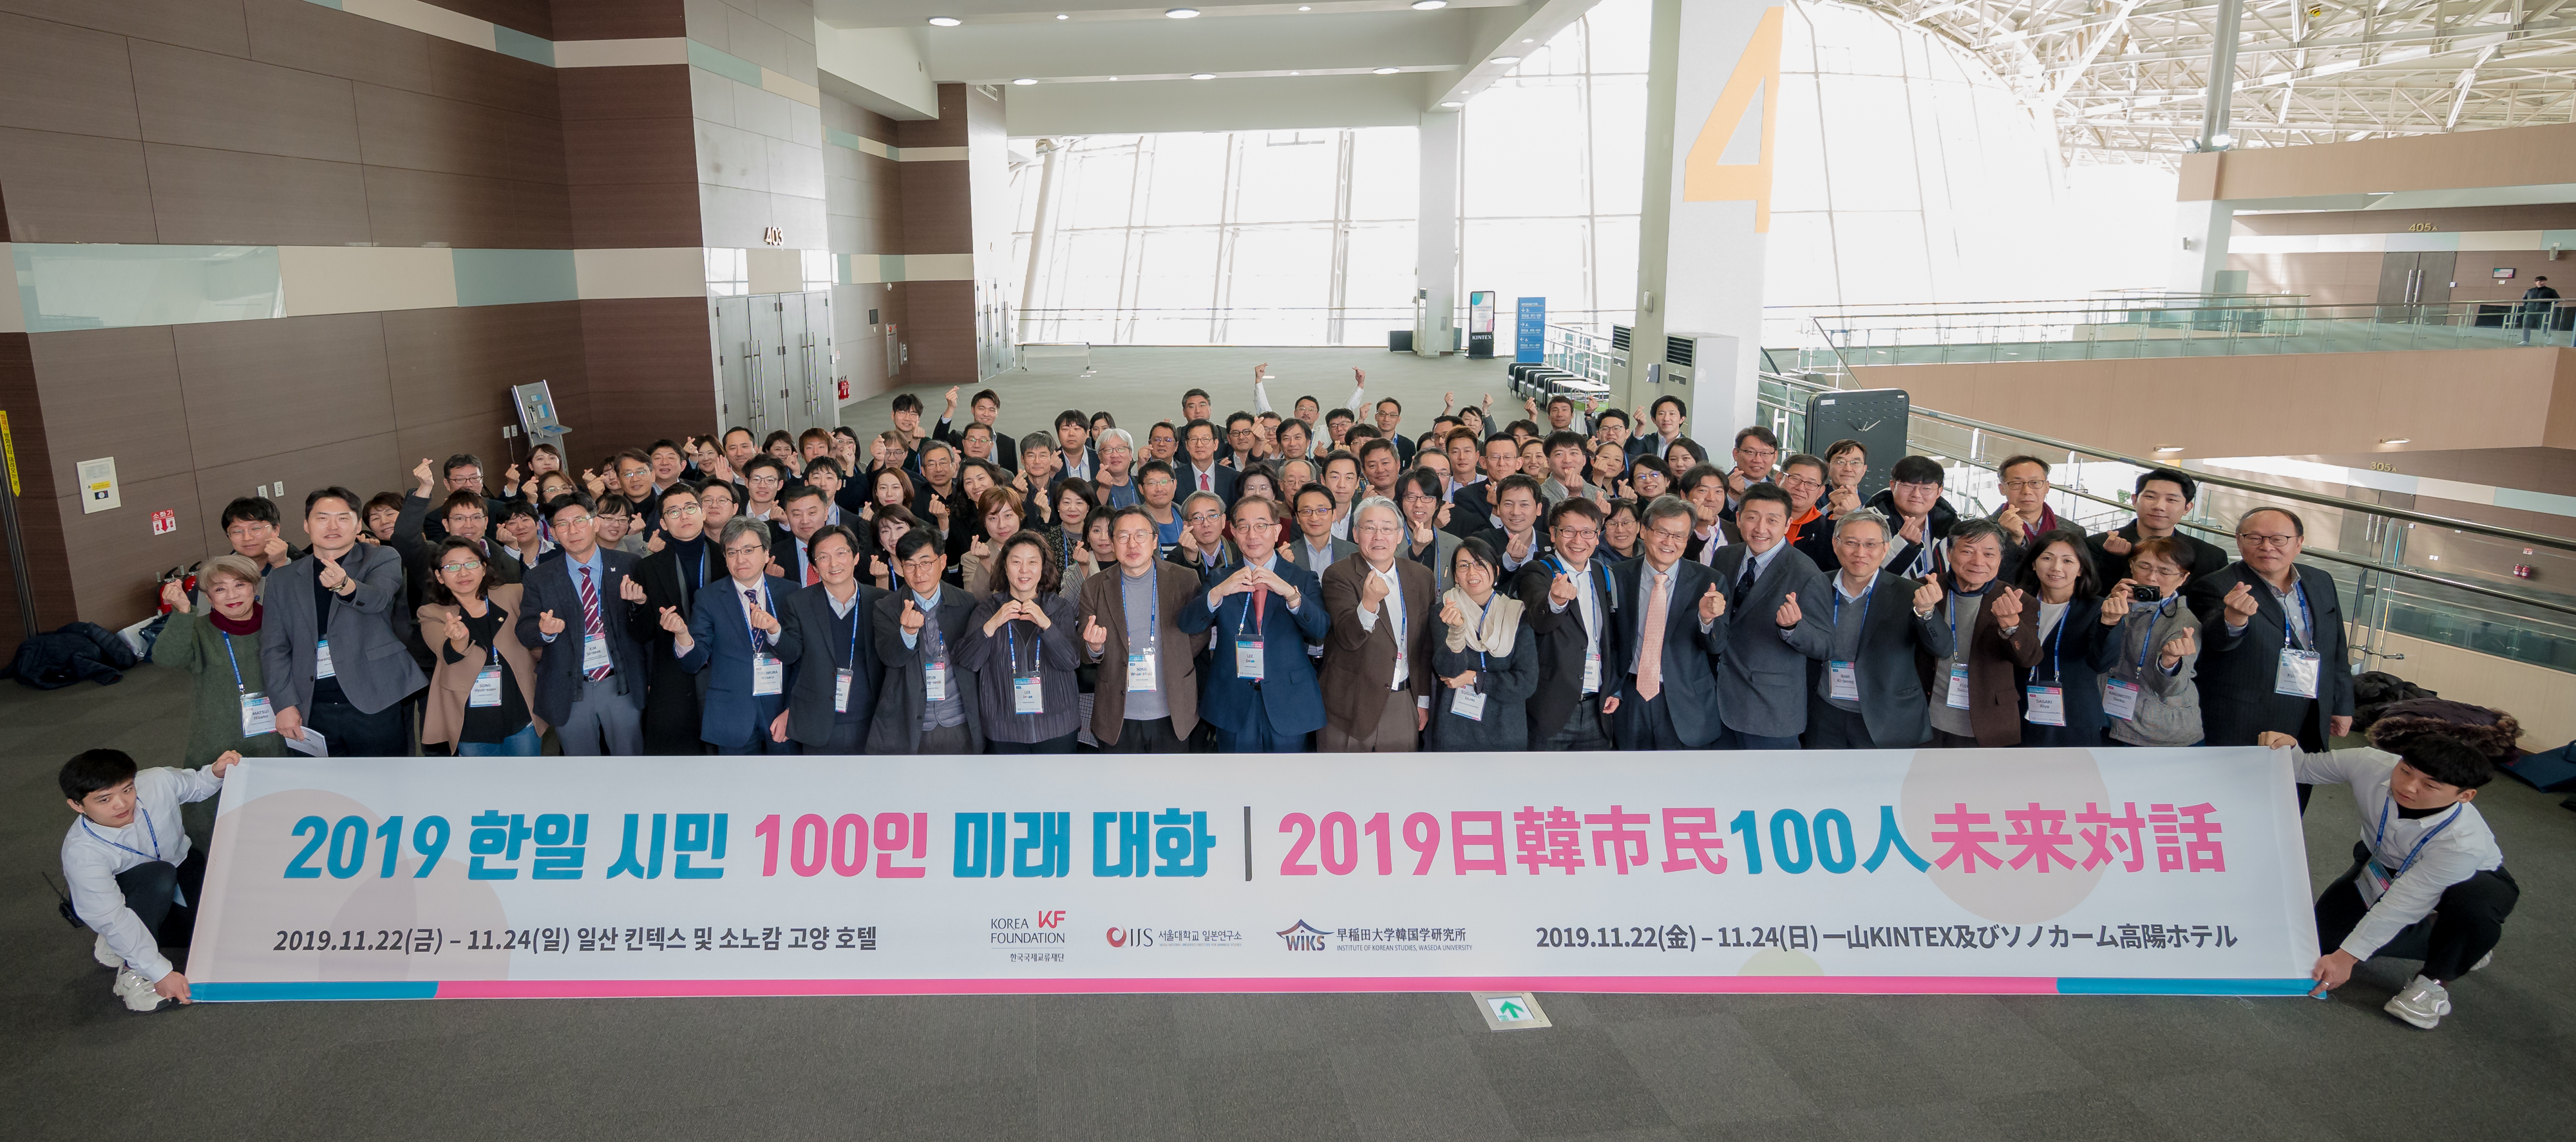 2019 Korea-Japan 100 Citizens' Future Talk